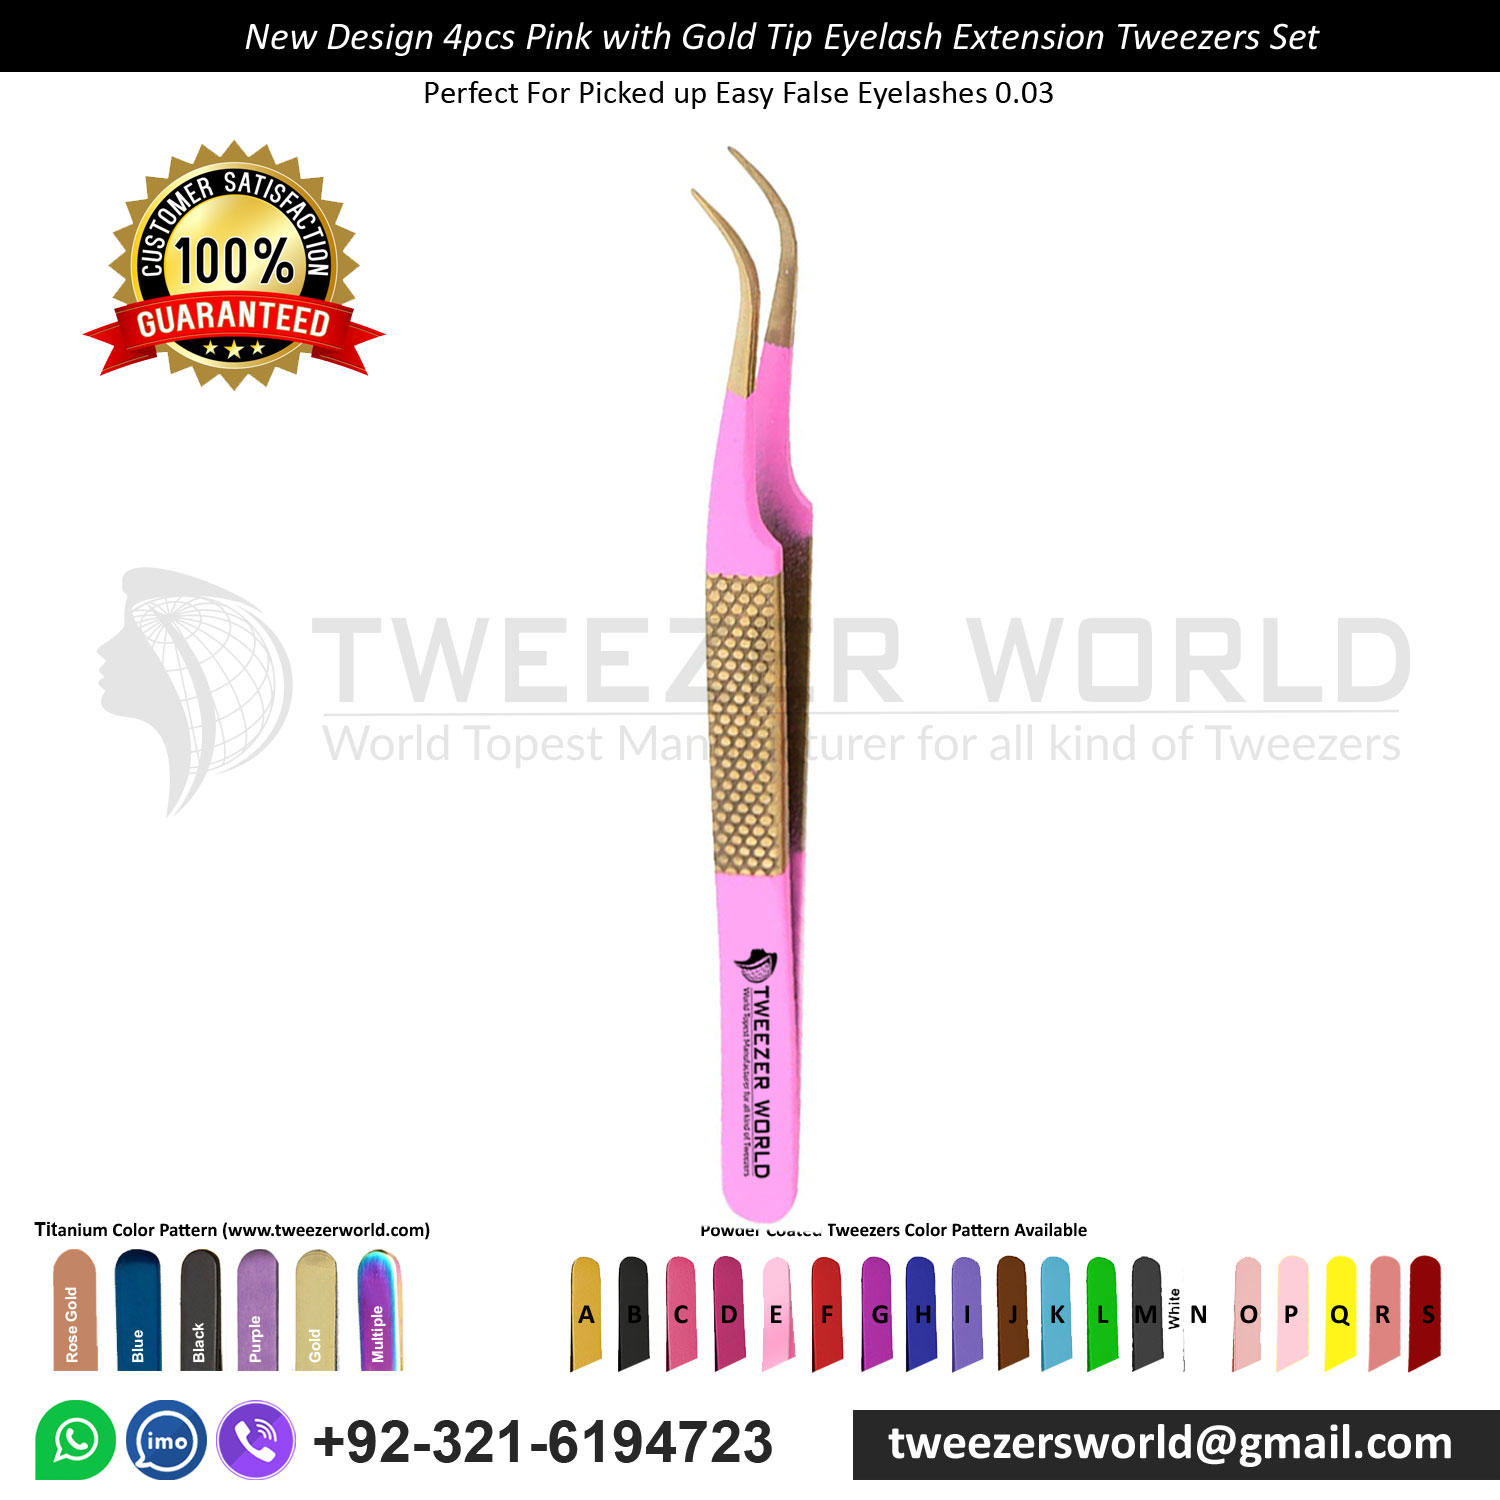 New Design 4pcs Pink with Gold Tip Eyelash Tweezers Sets